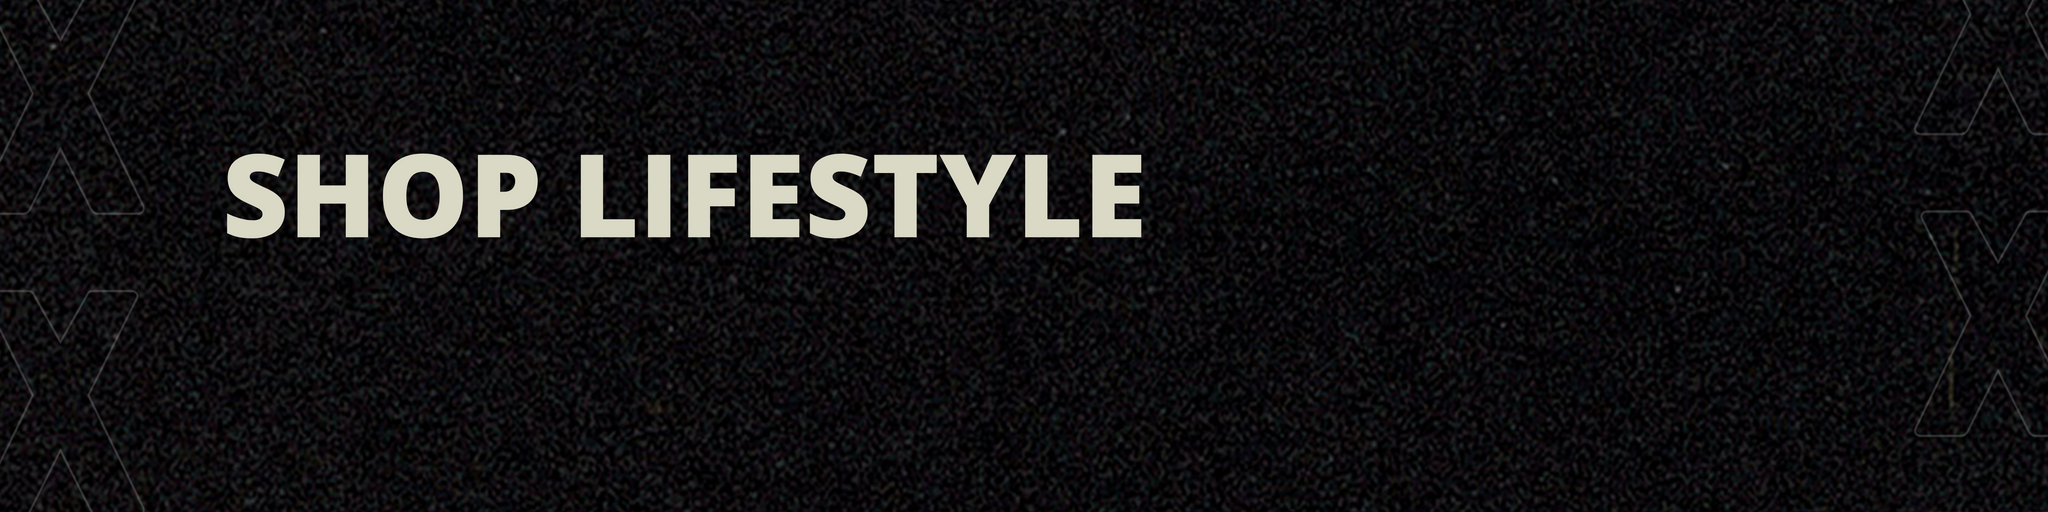 Shop lifestyle Banner